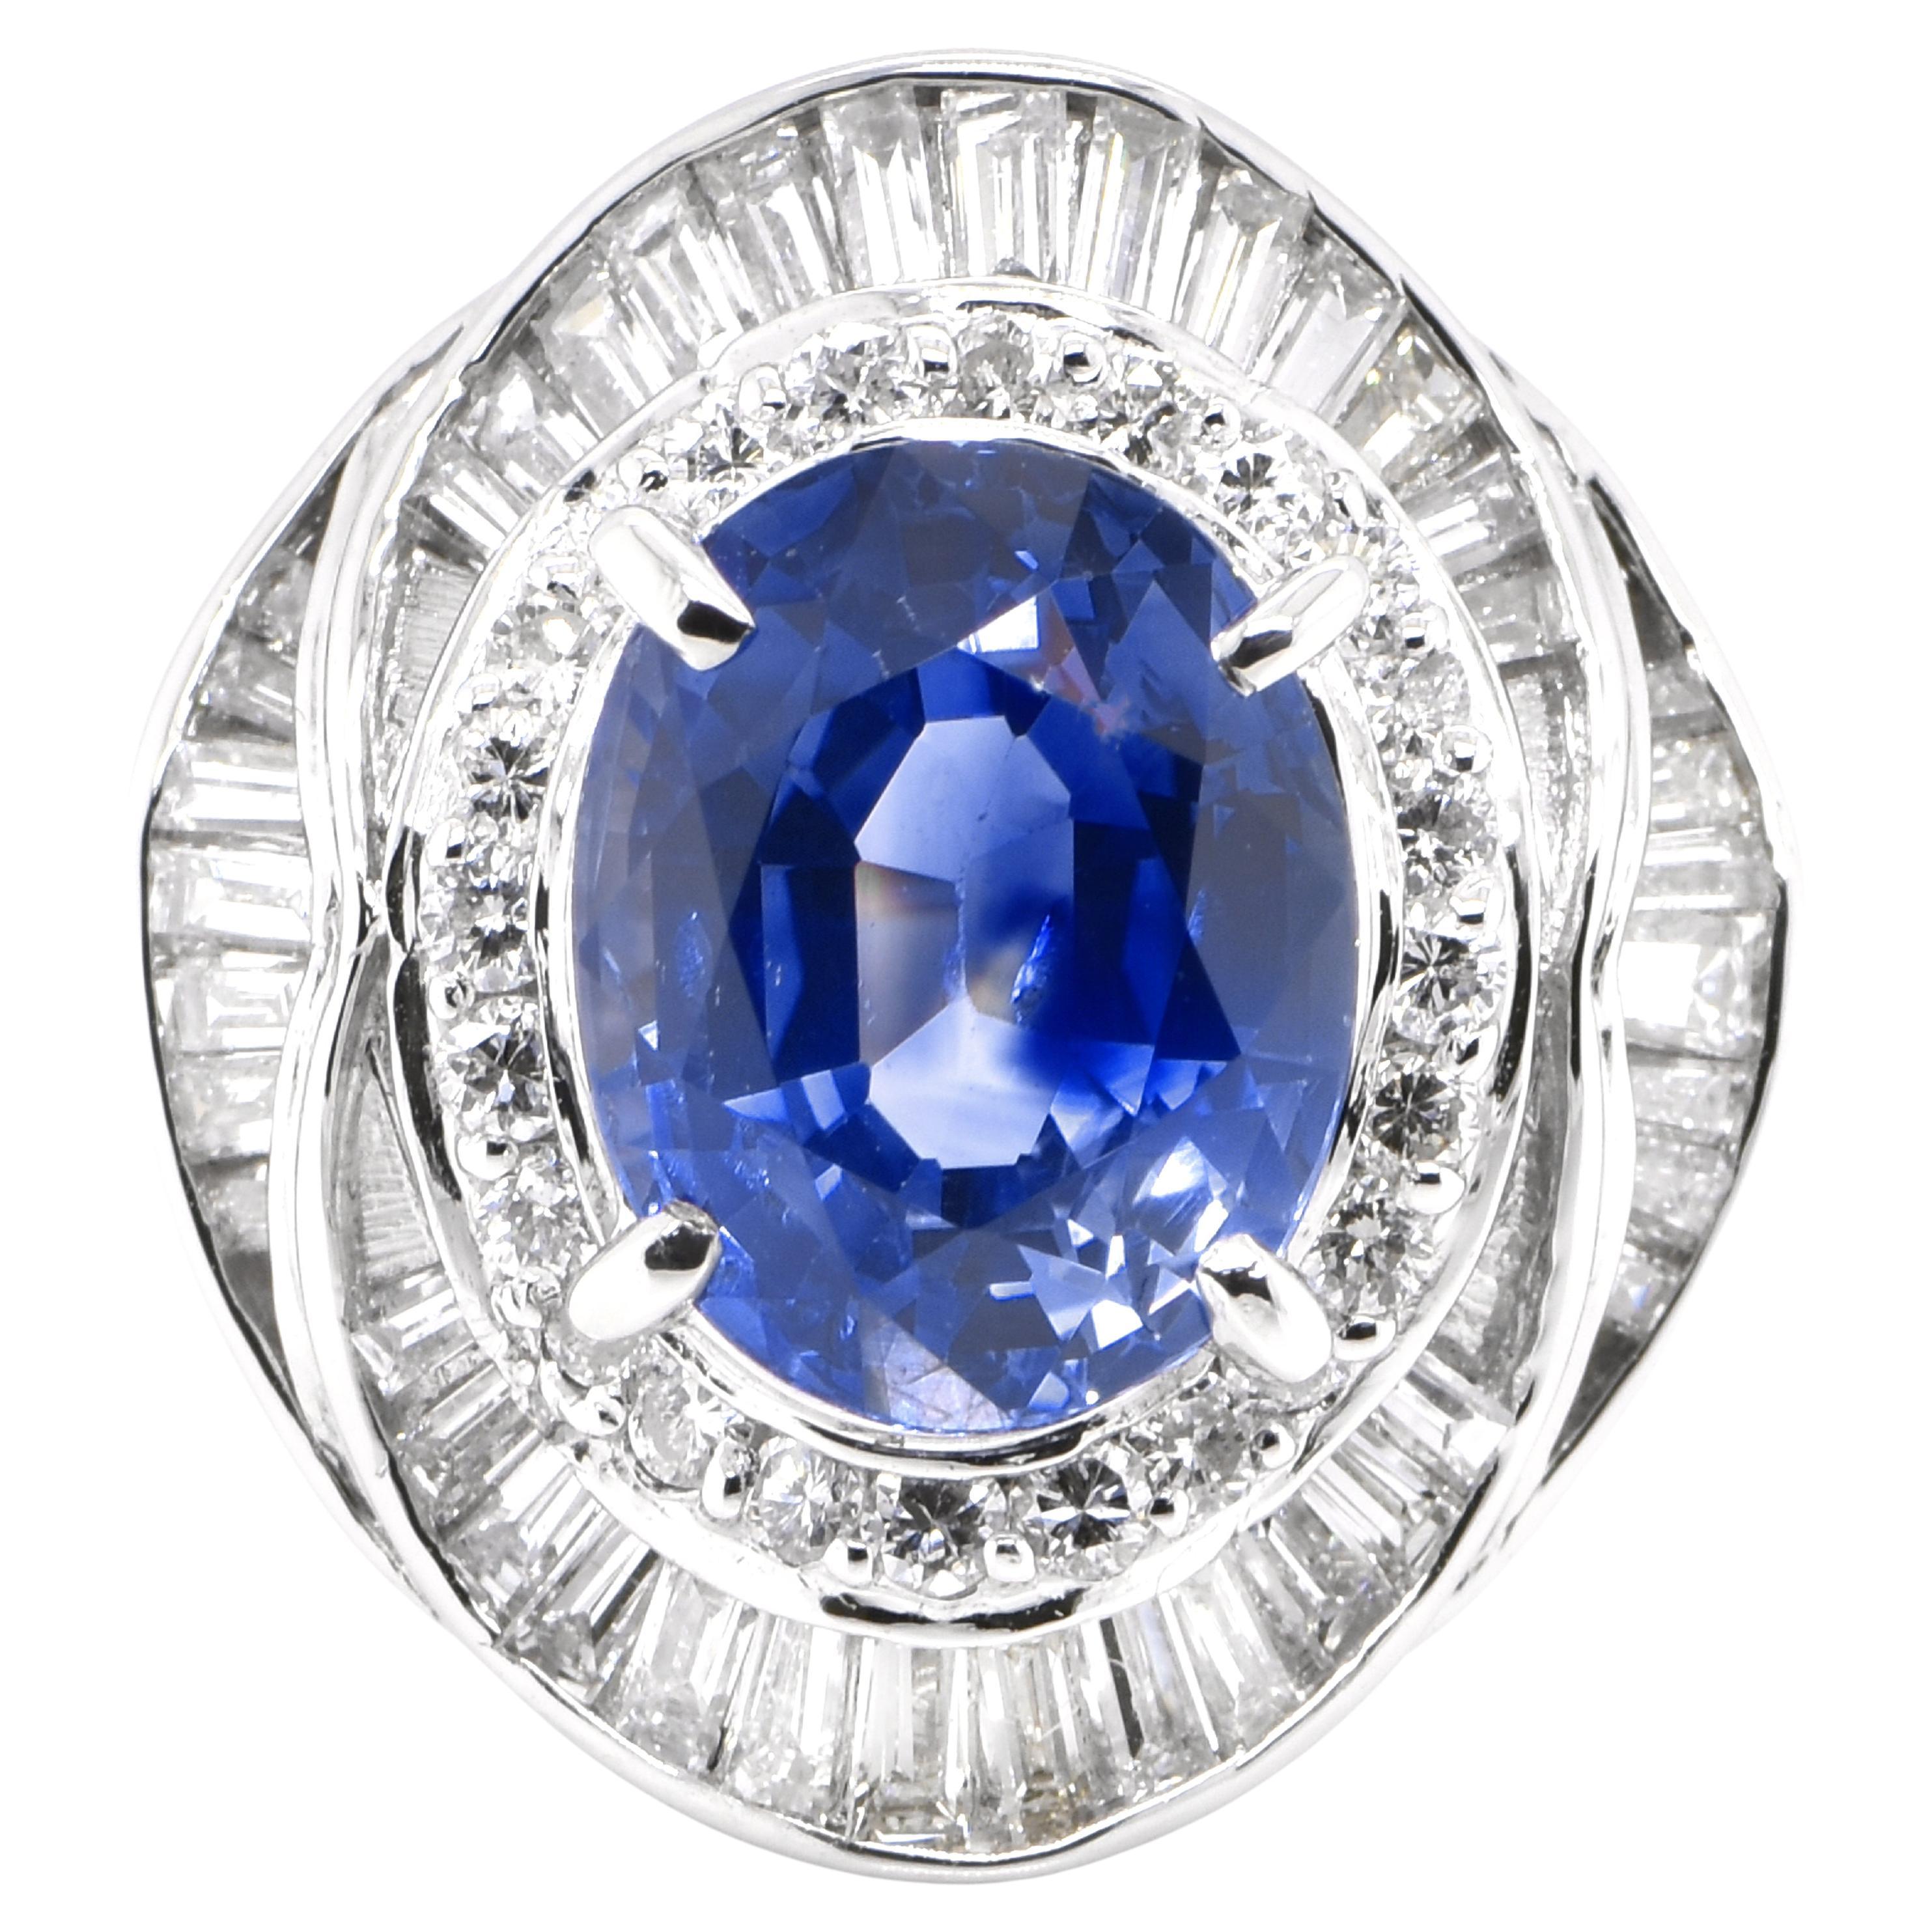 5.09 Carat Natural Blue Sapphire and Diamond Vintage Estate Ring Set in Platinum